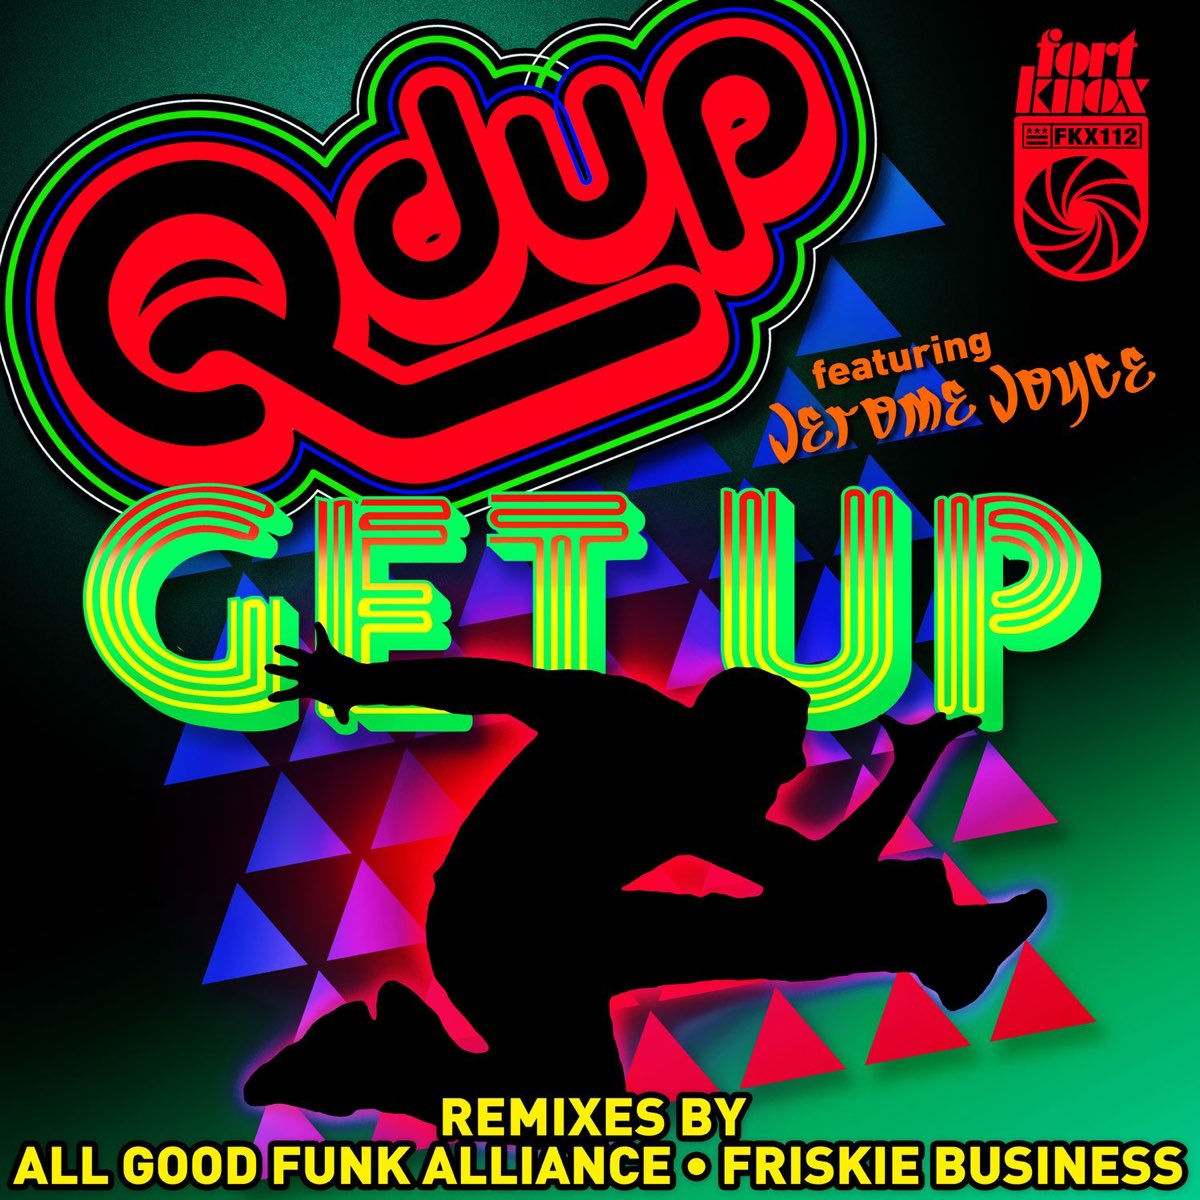 Funked up remix. Альбом get up. Ремикс ап. Funk Alliance. Get up Remix.